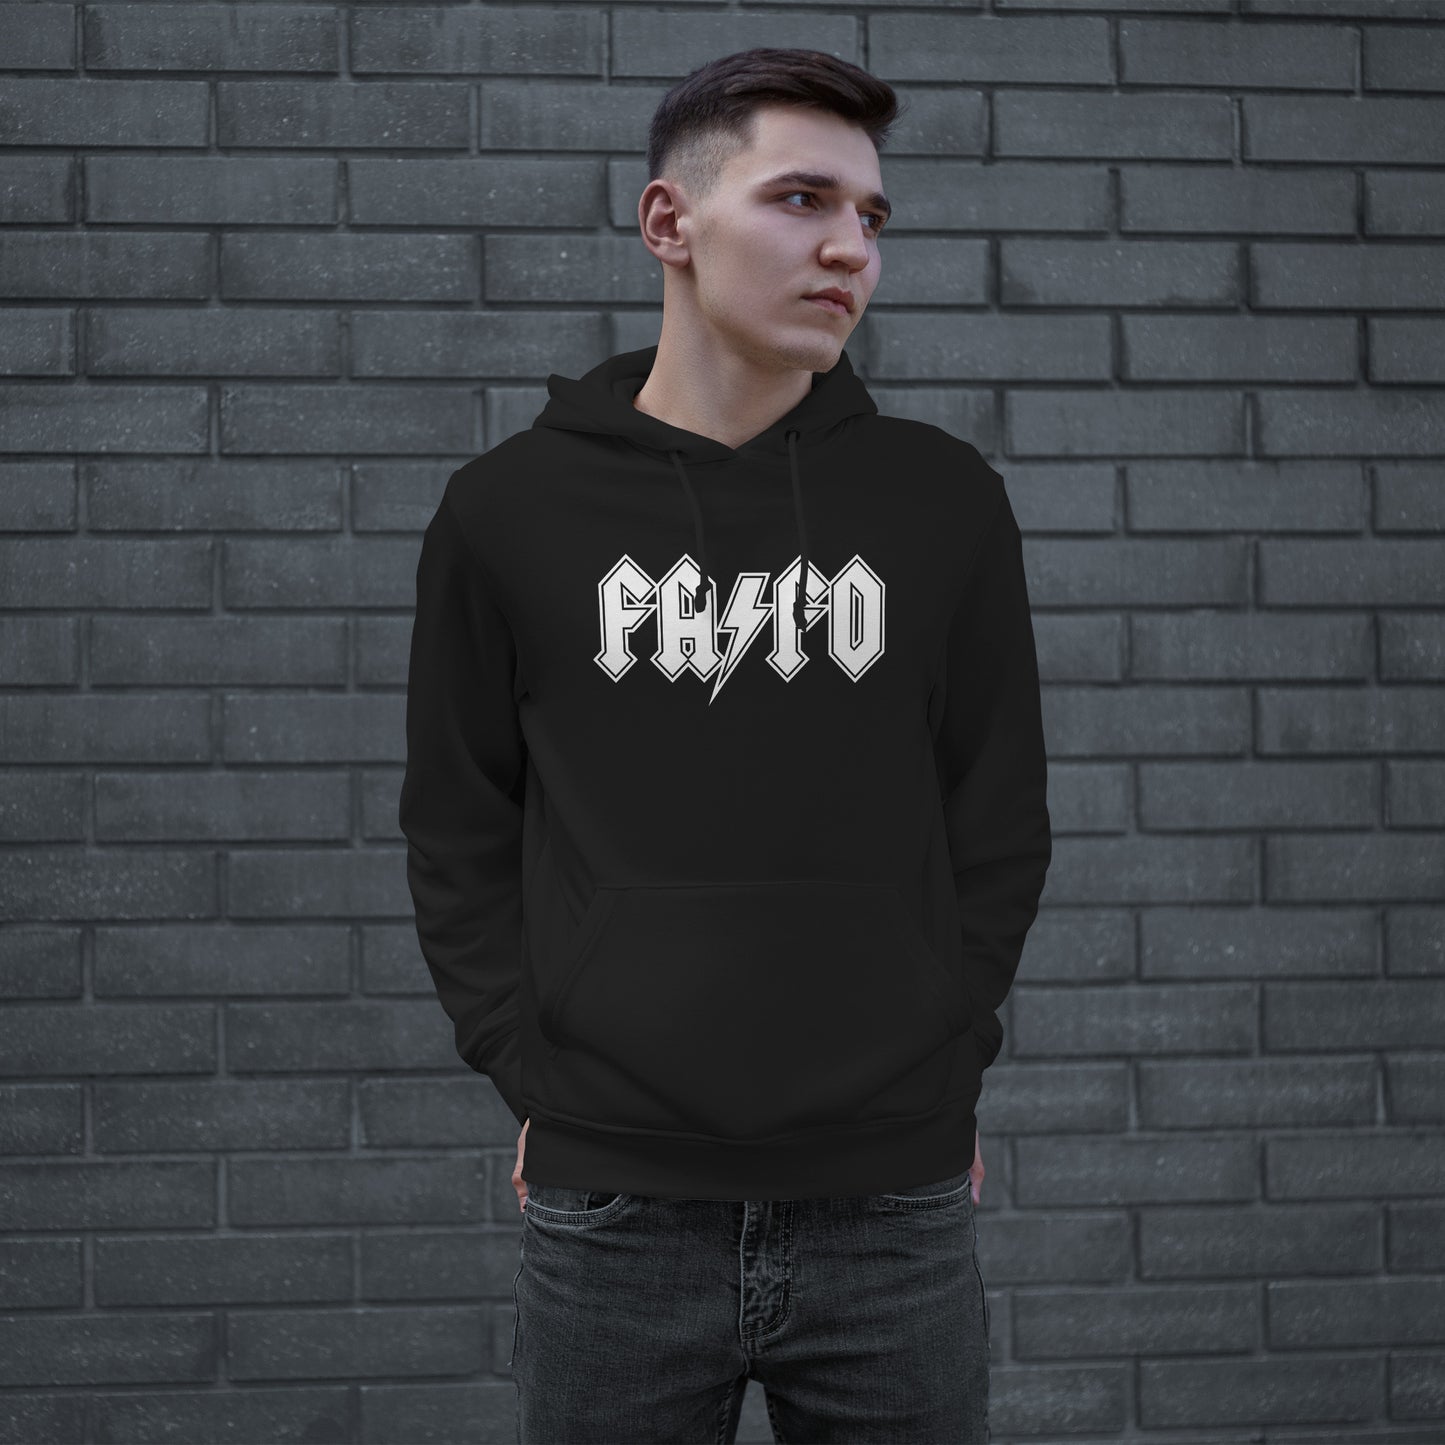 FAFO Sweatshirt